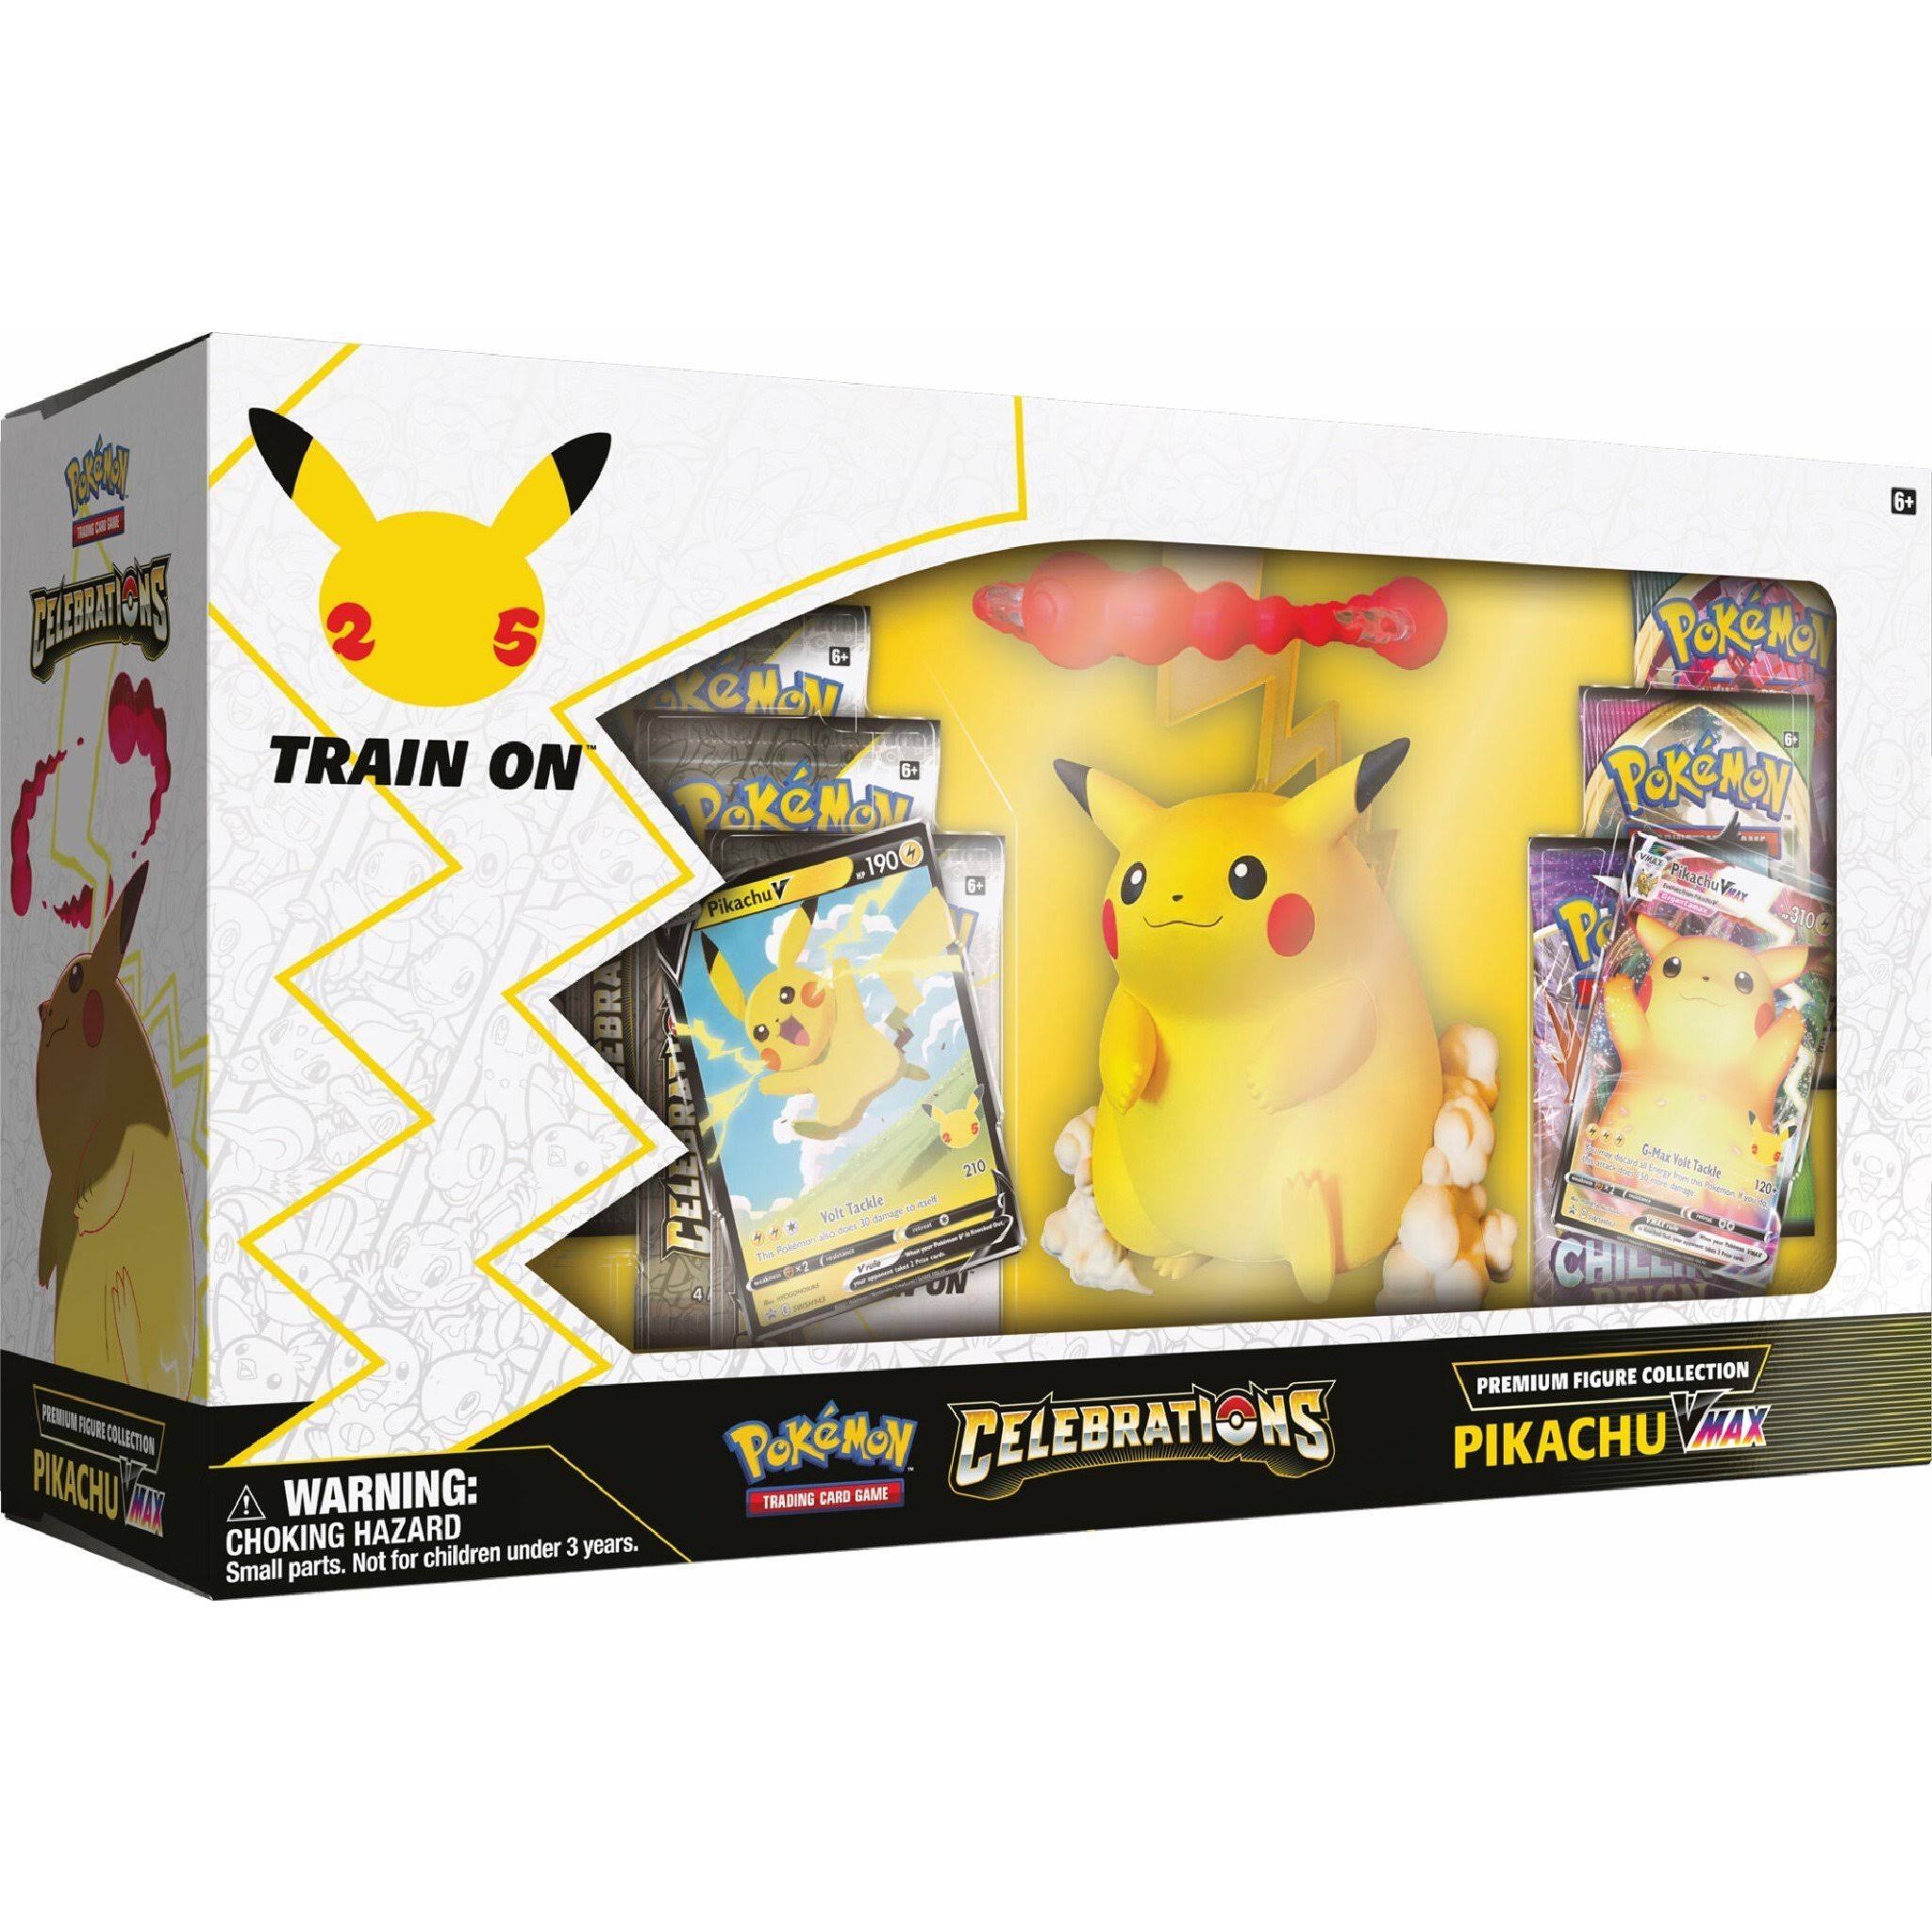 Pokemon TCG Celebrations Premium Figure Collection - Pikachu VMAX